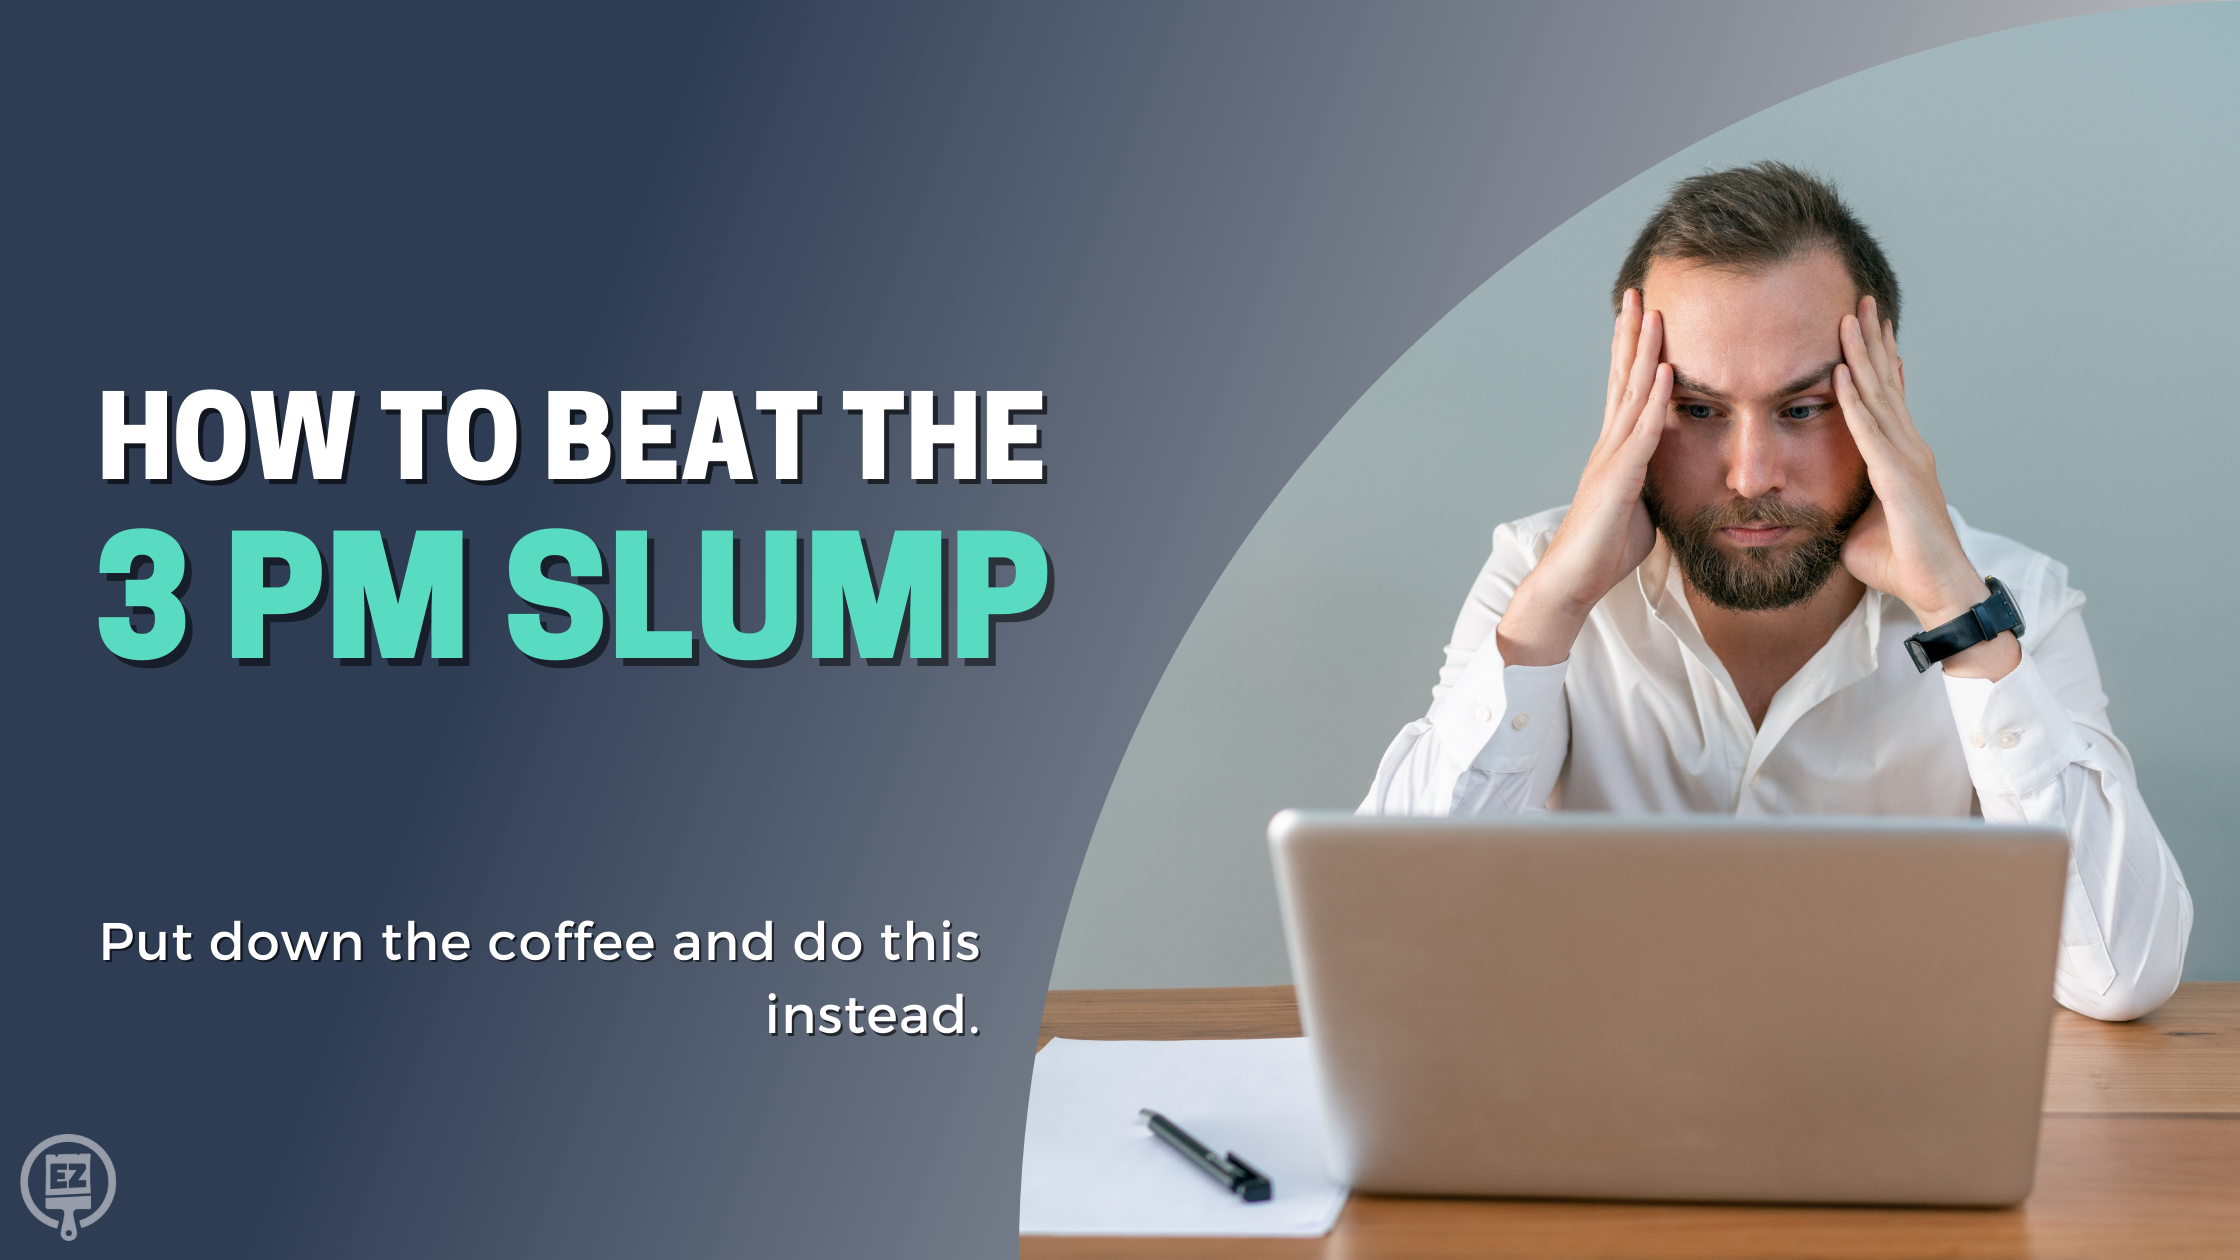 How to Beat the 3 PM Slump